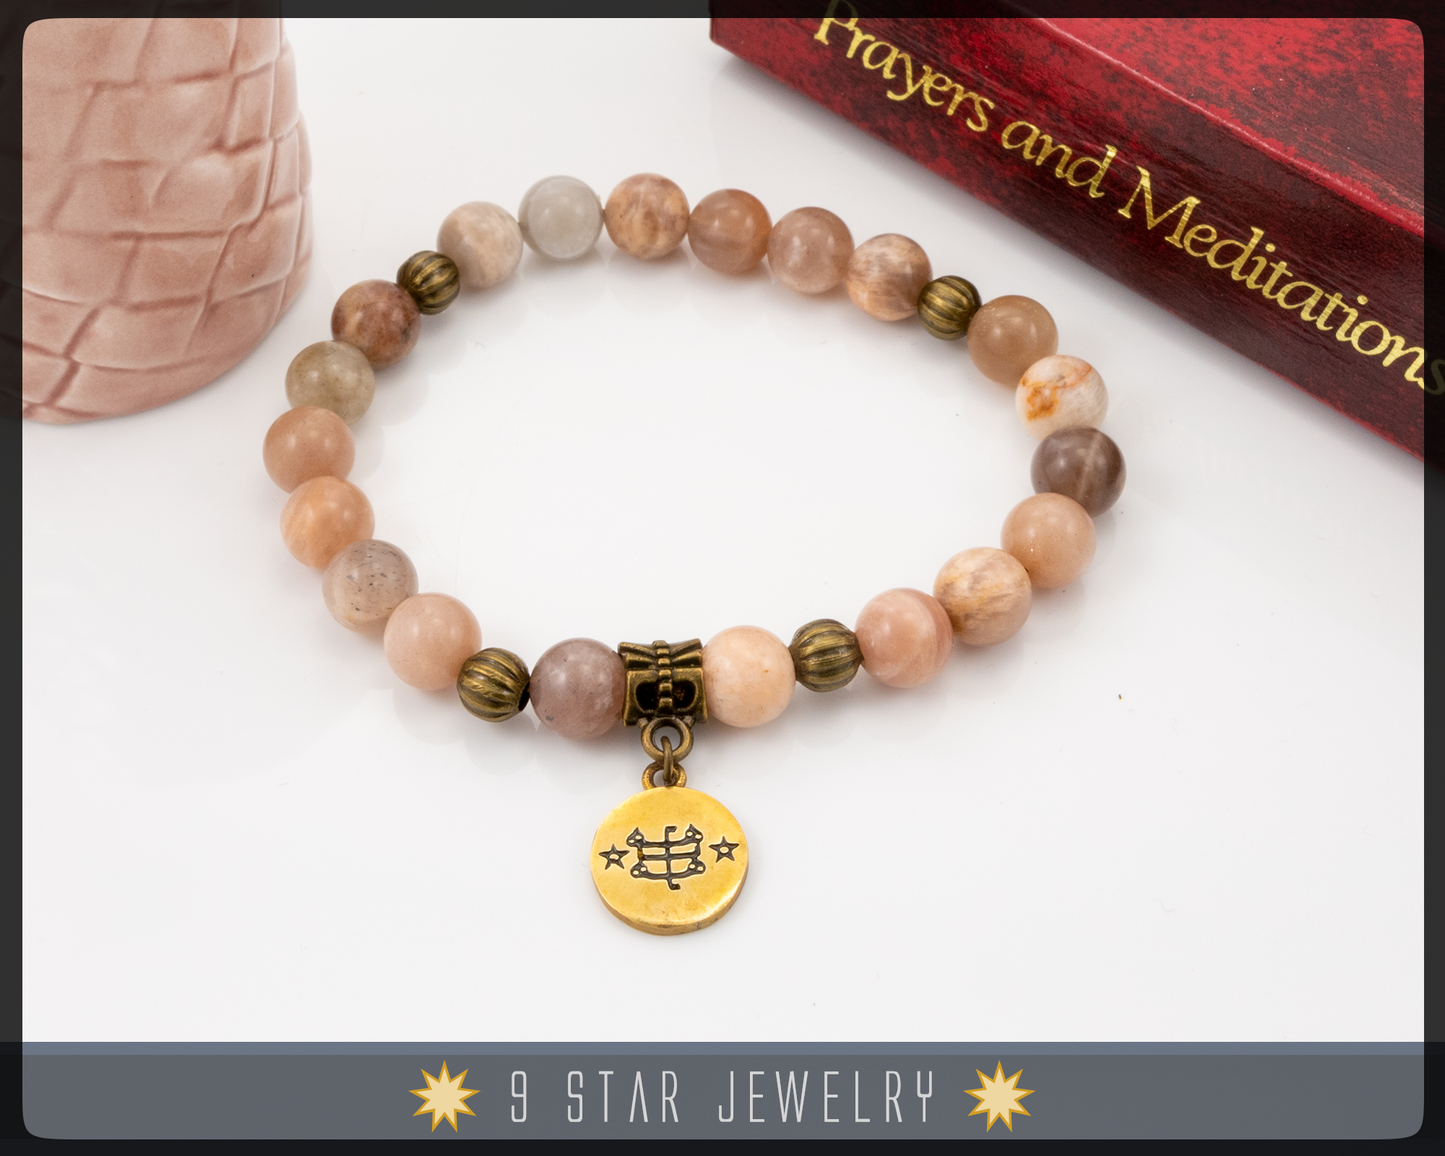 Sunstone Bracelet with Baha'i ringstone symbol "Minna"